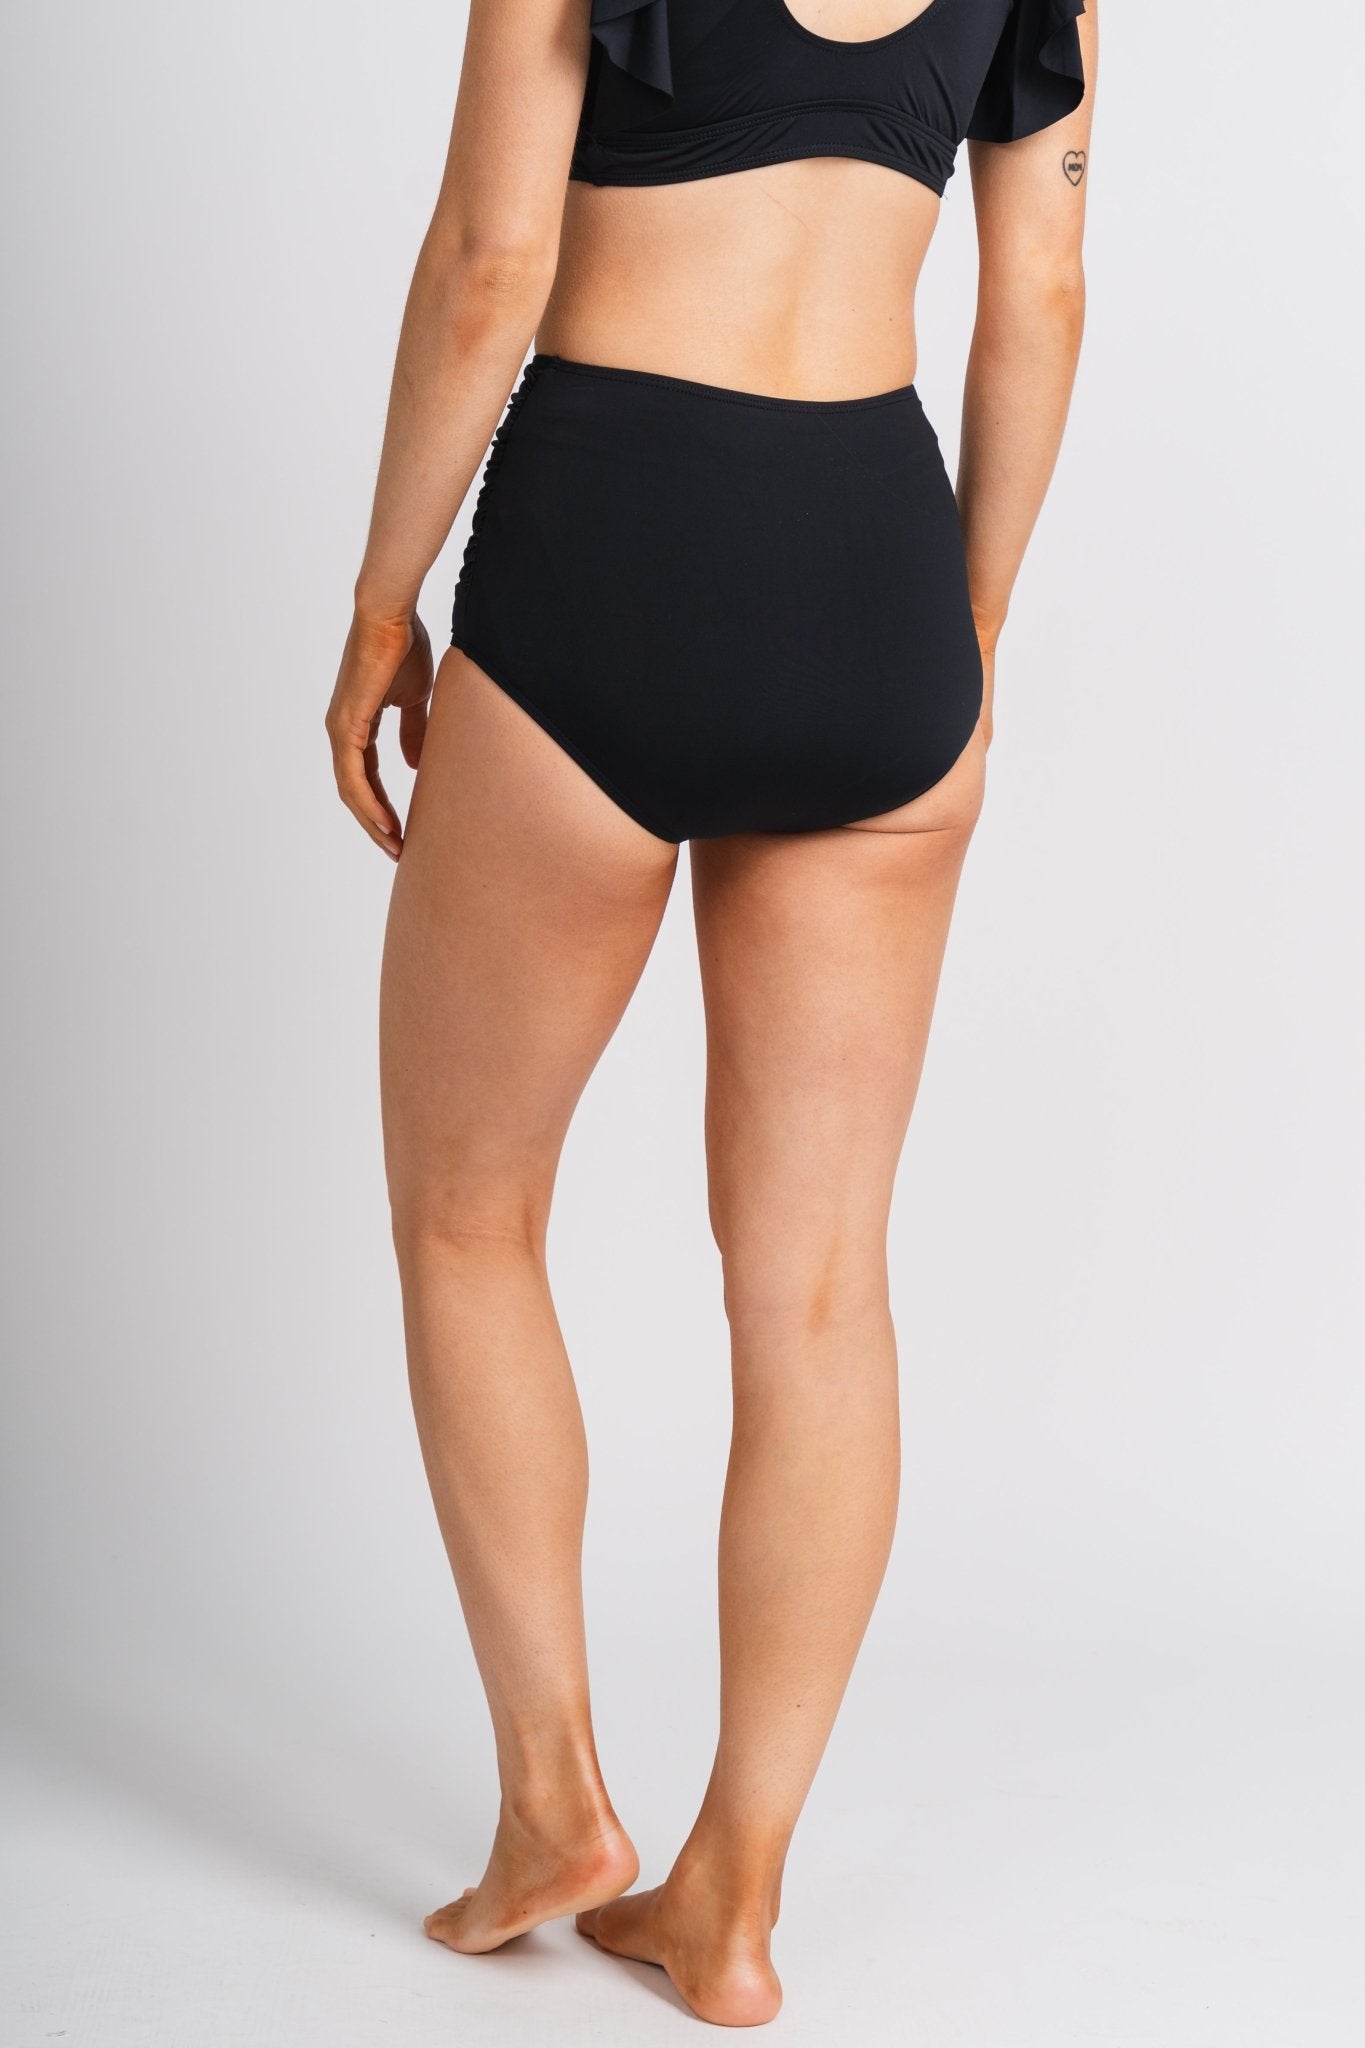 High waist bikini bottoms black - Cute swimsuit - Fun Vacay Basics at Lush Fashion Lounge Boutique in Oklahoma City